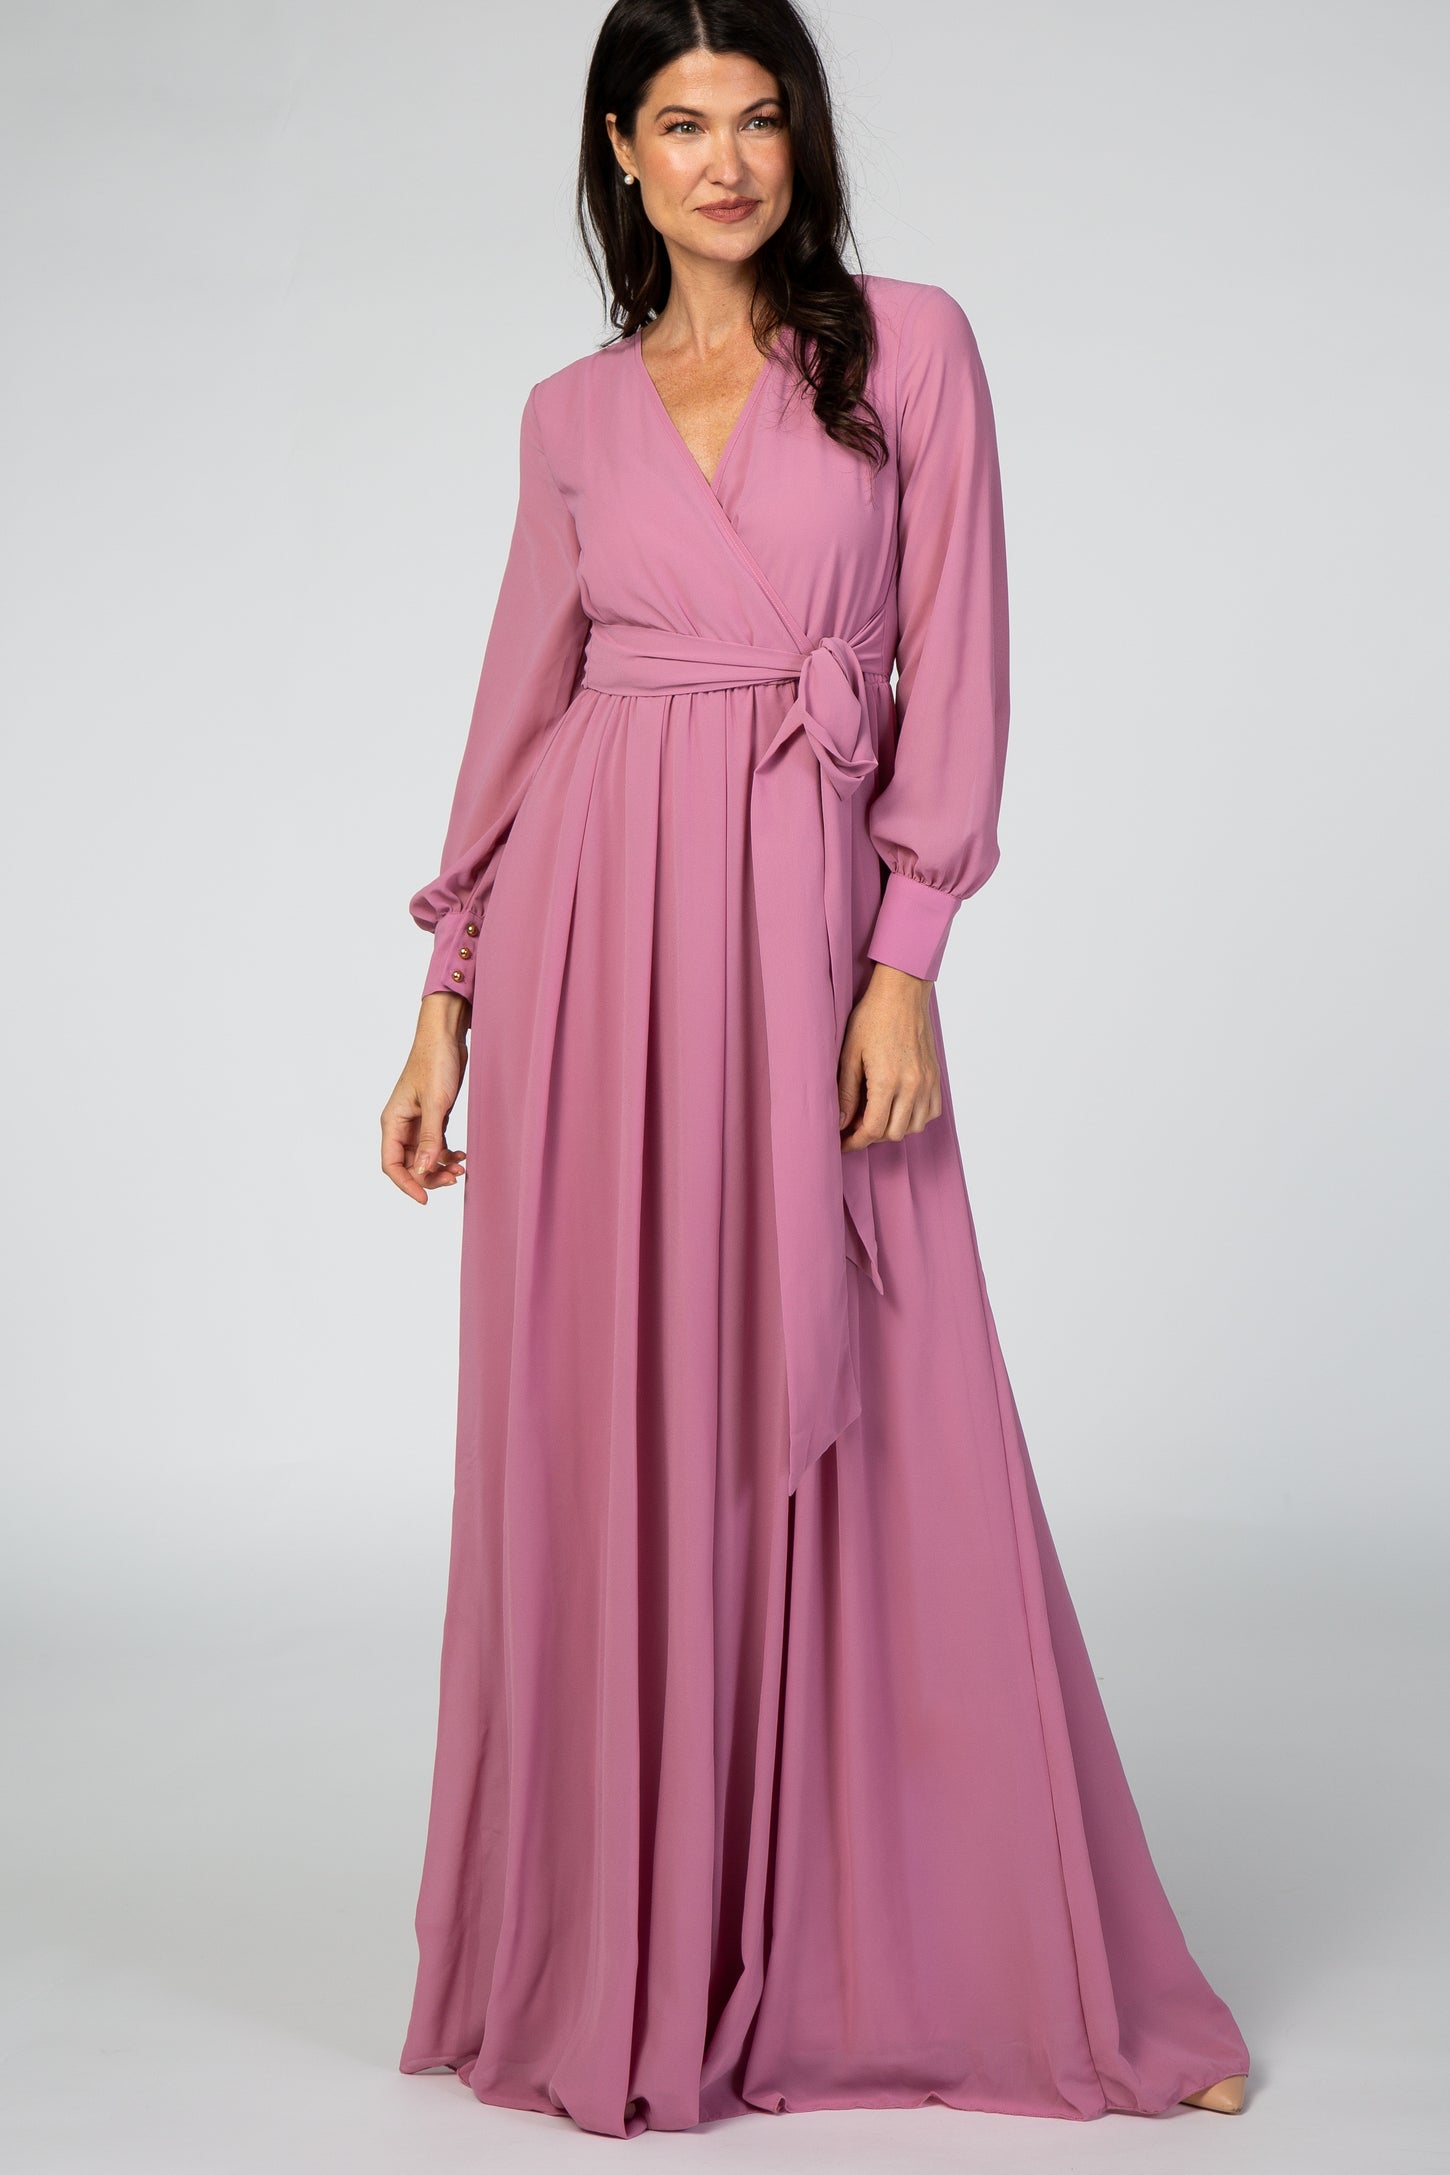 Lavender Chiffon Long Sleeve Maternity Maxi Dress